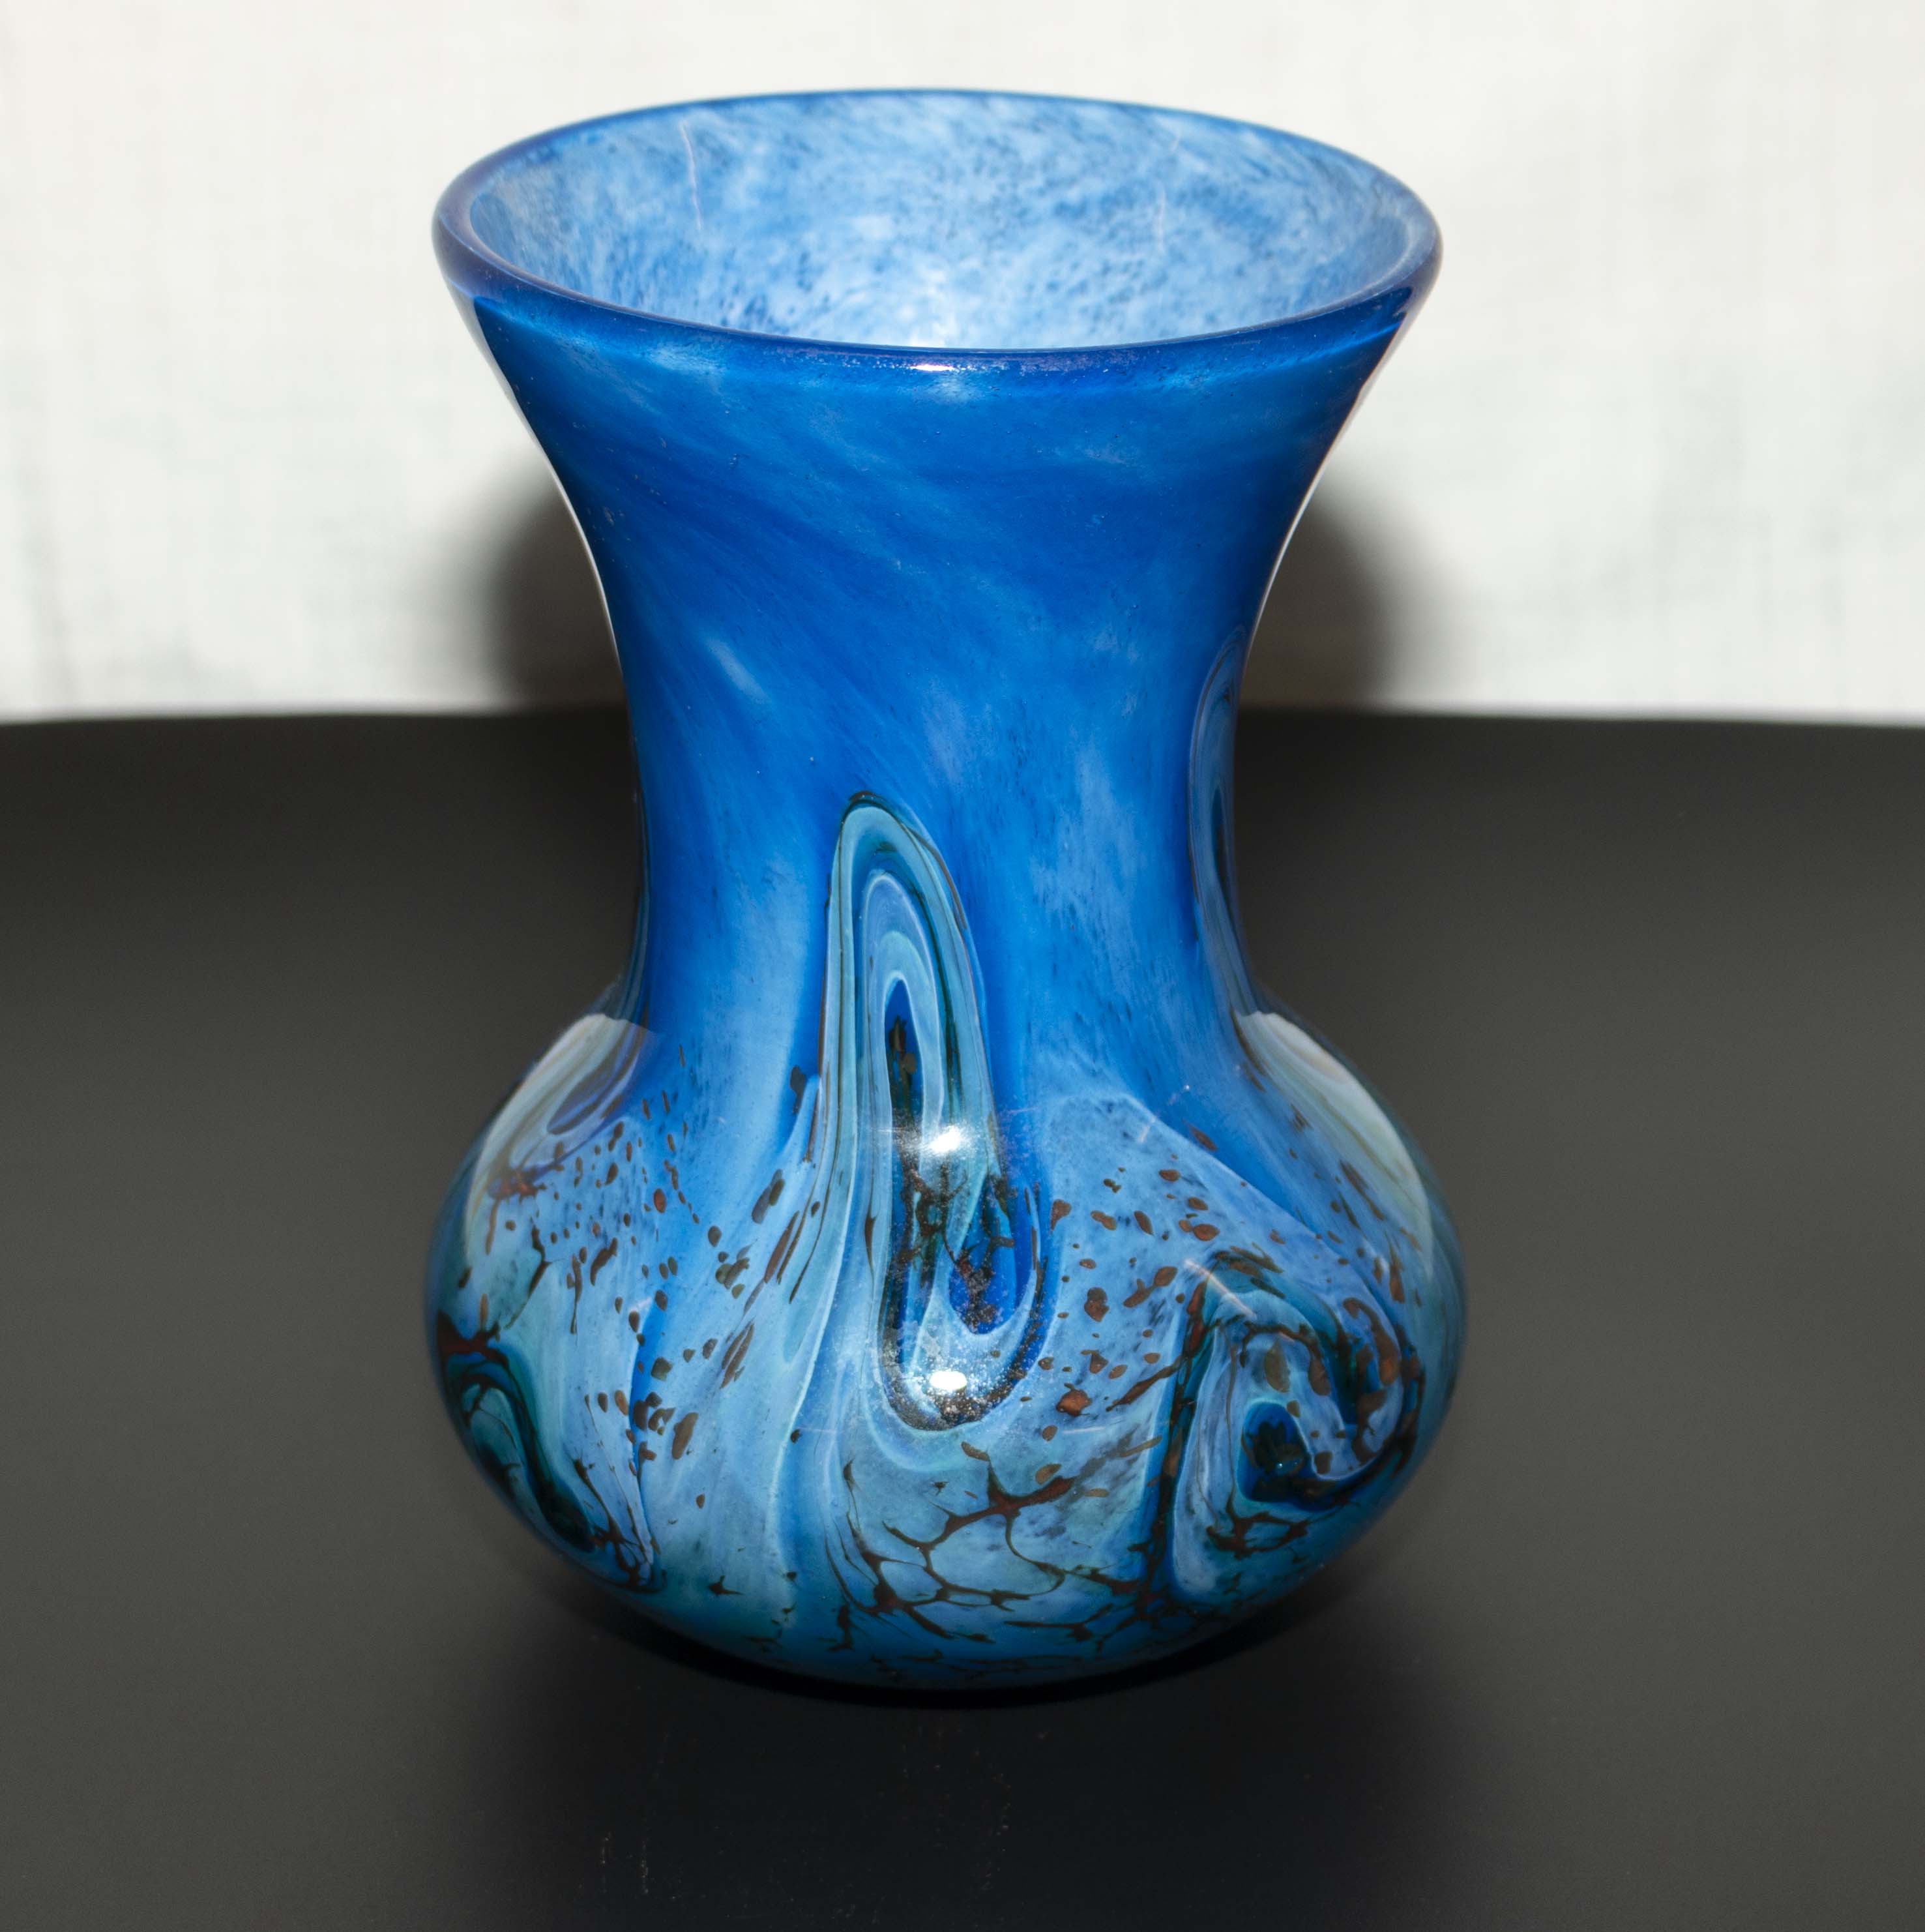 A Scottish Borders Art Glass vase